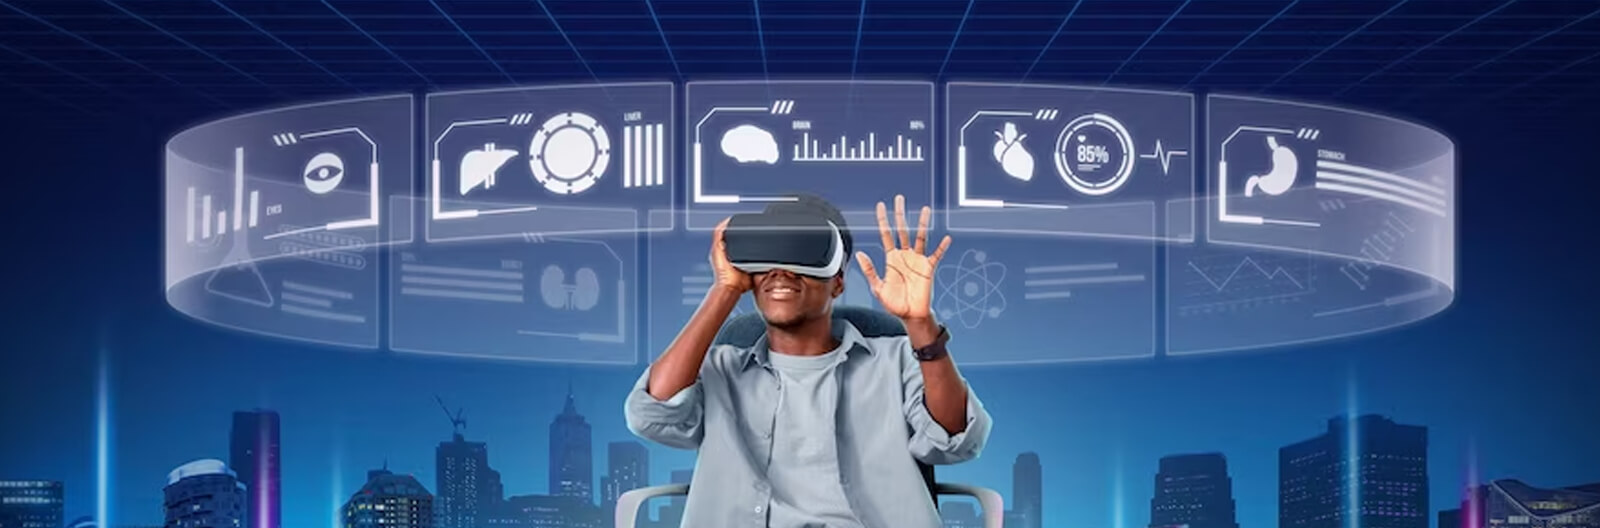 Education & Virtual Reality